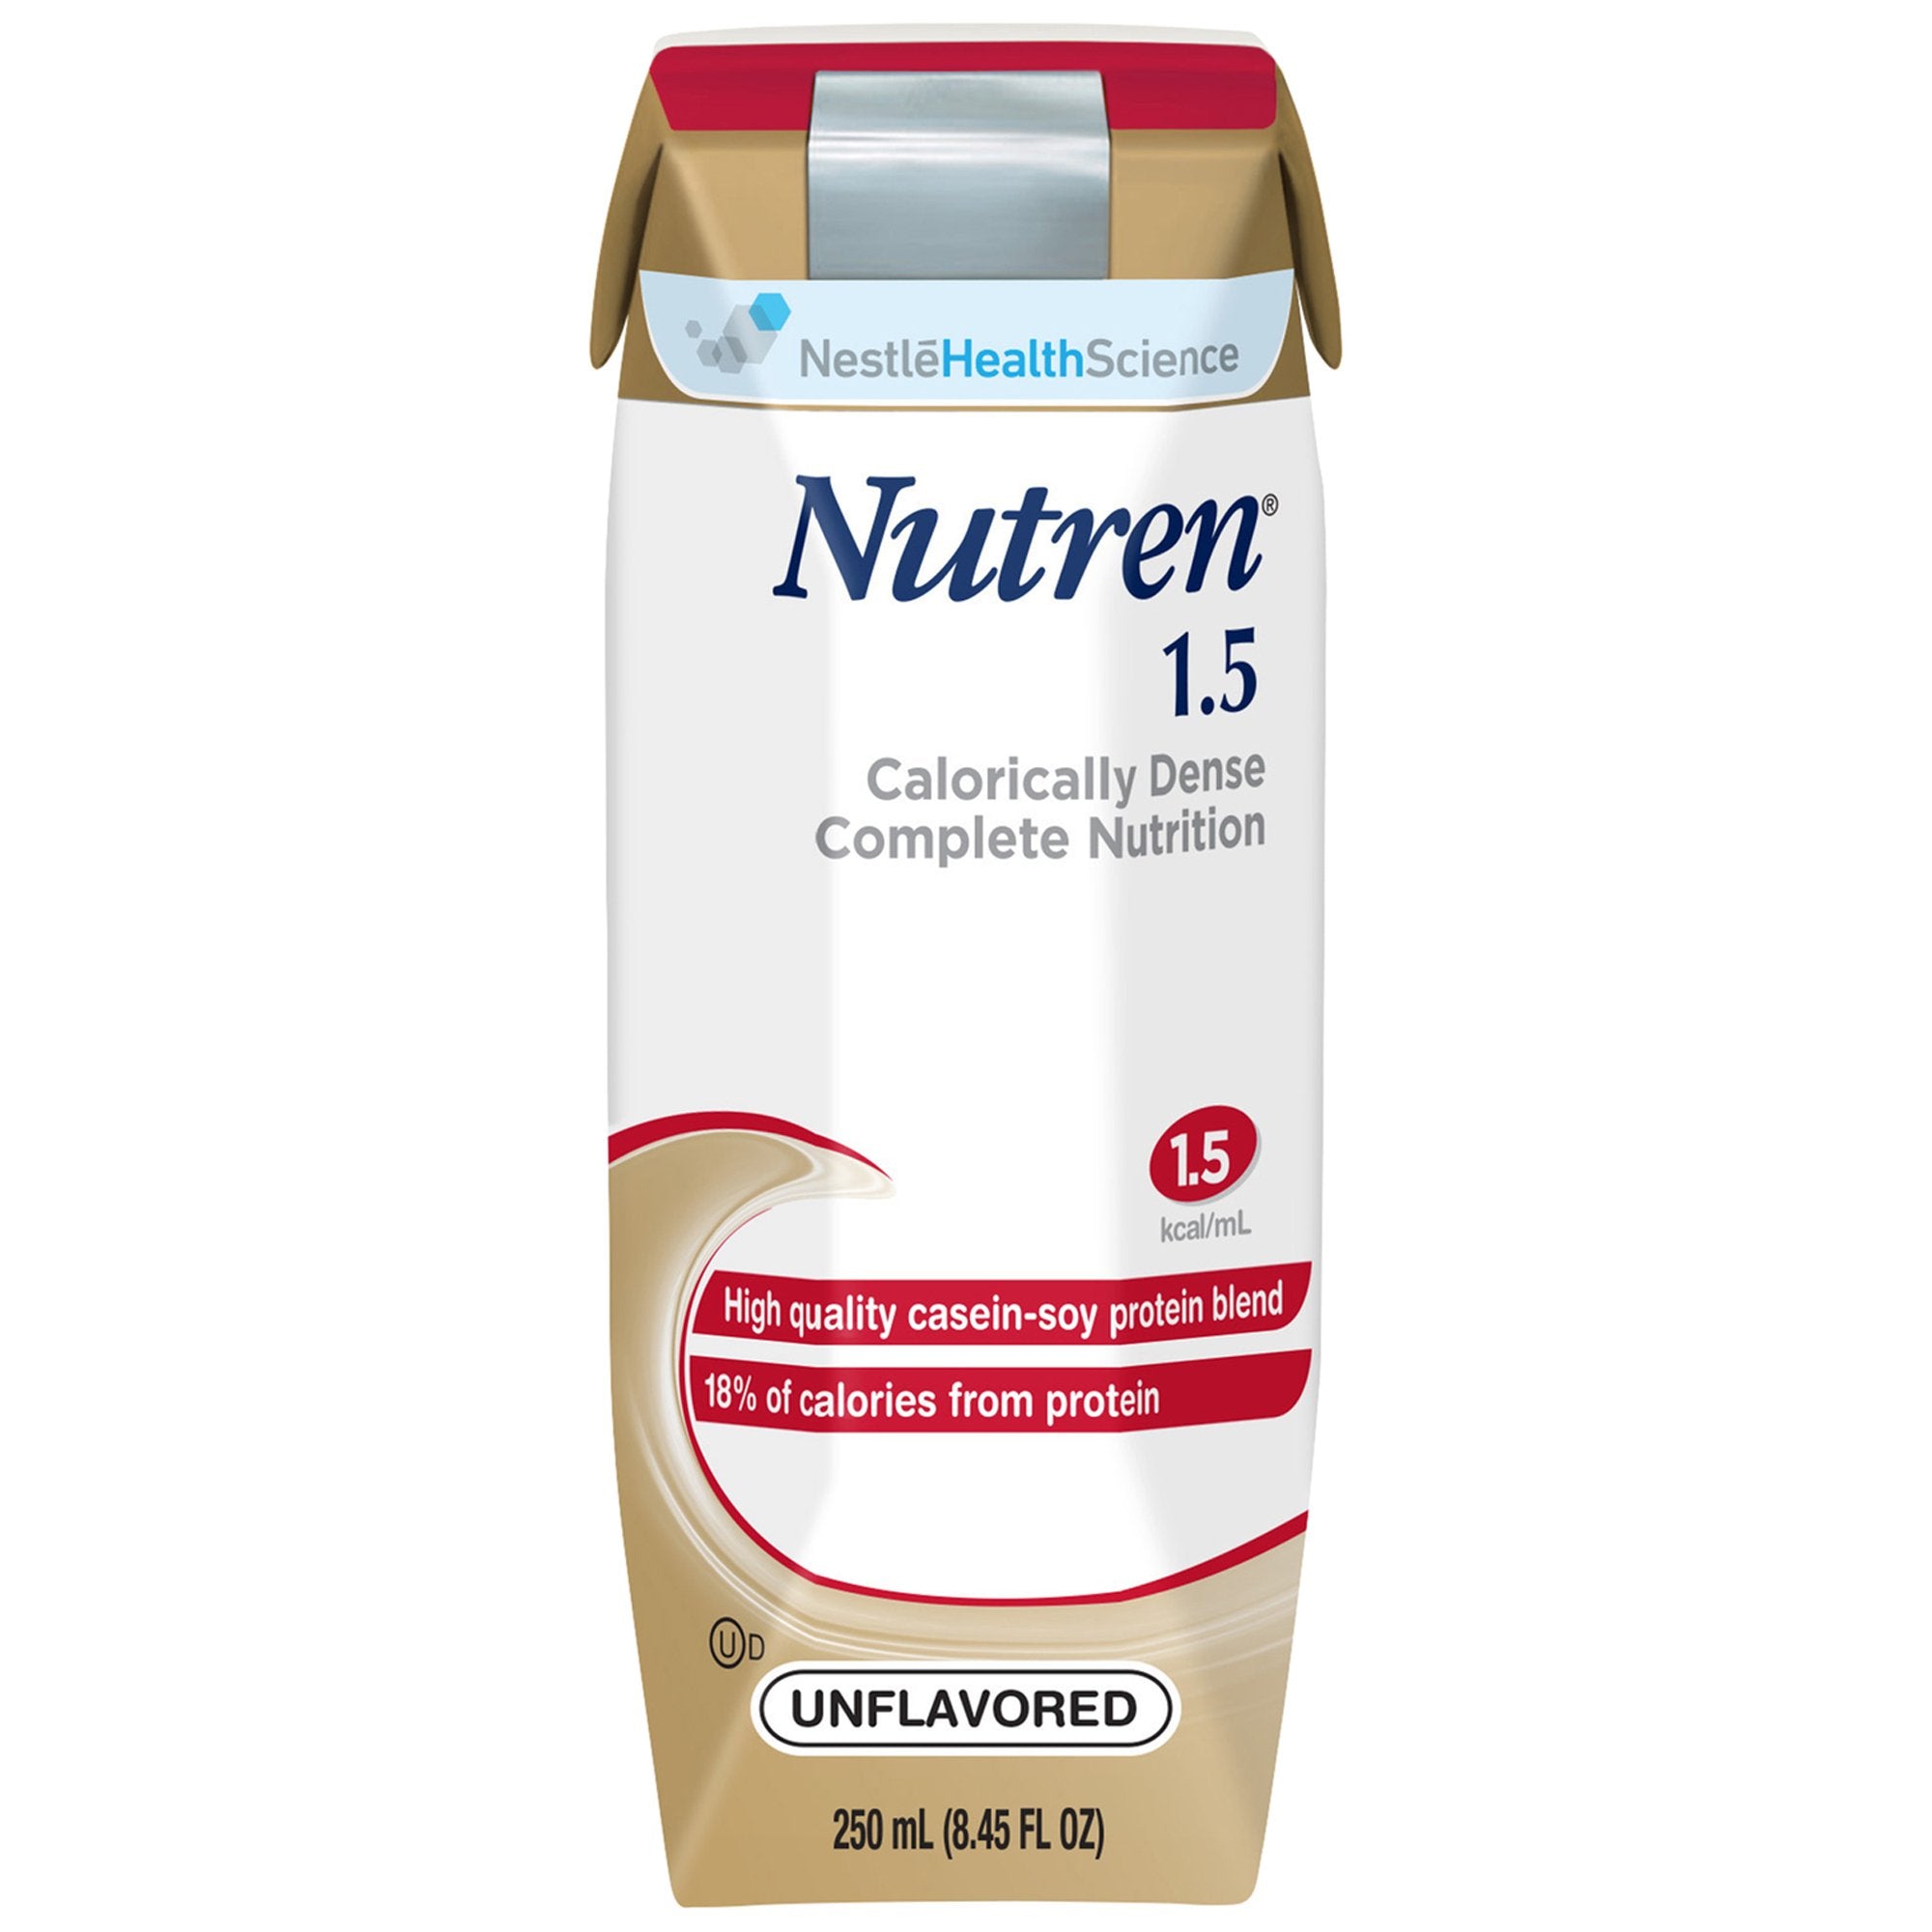 Nutren 1.5 Ready to Use Tube Feeding Formula, 8.45 oz. Carton -Case of 24